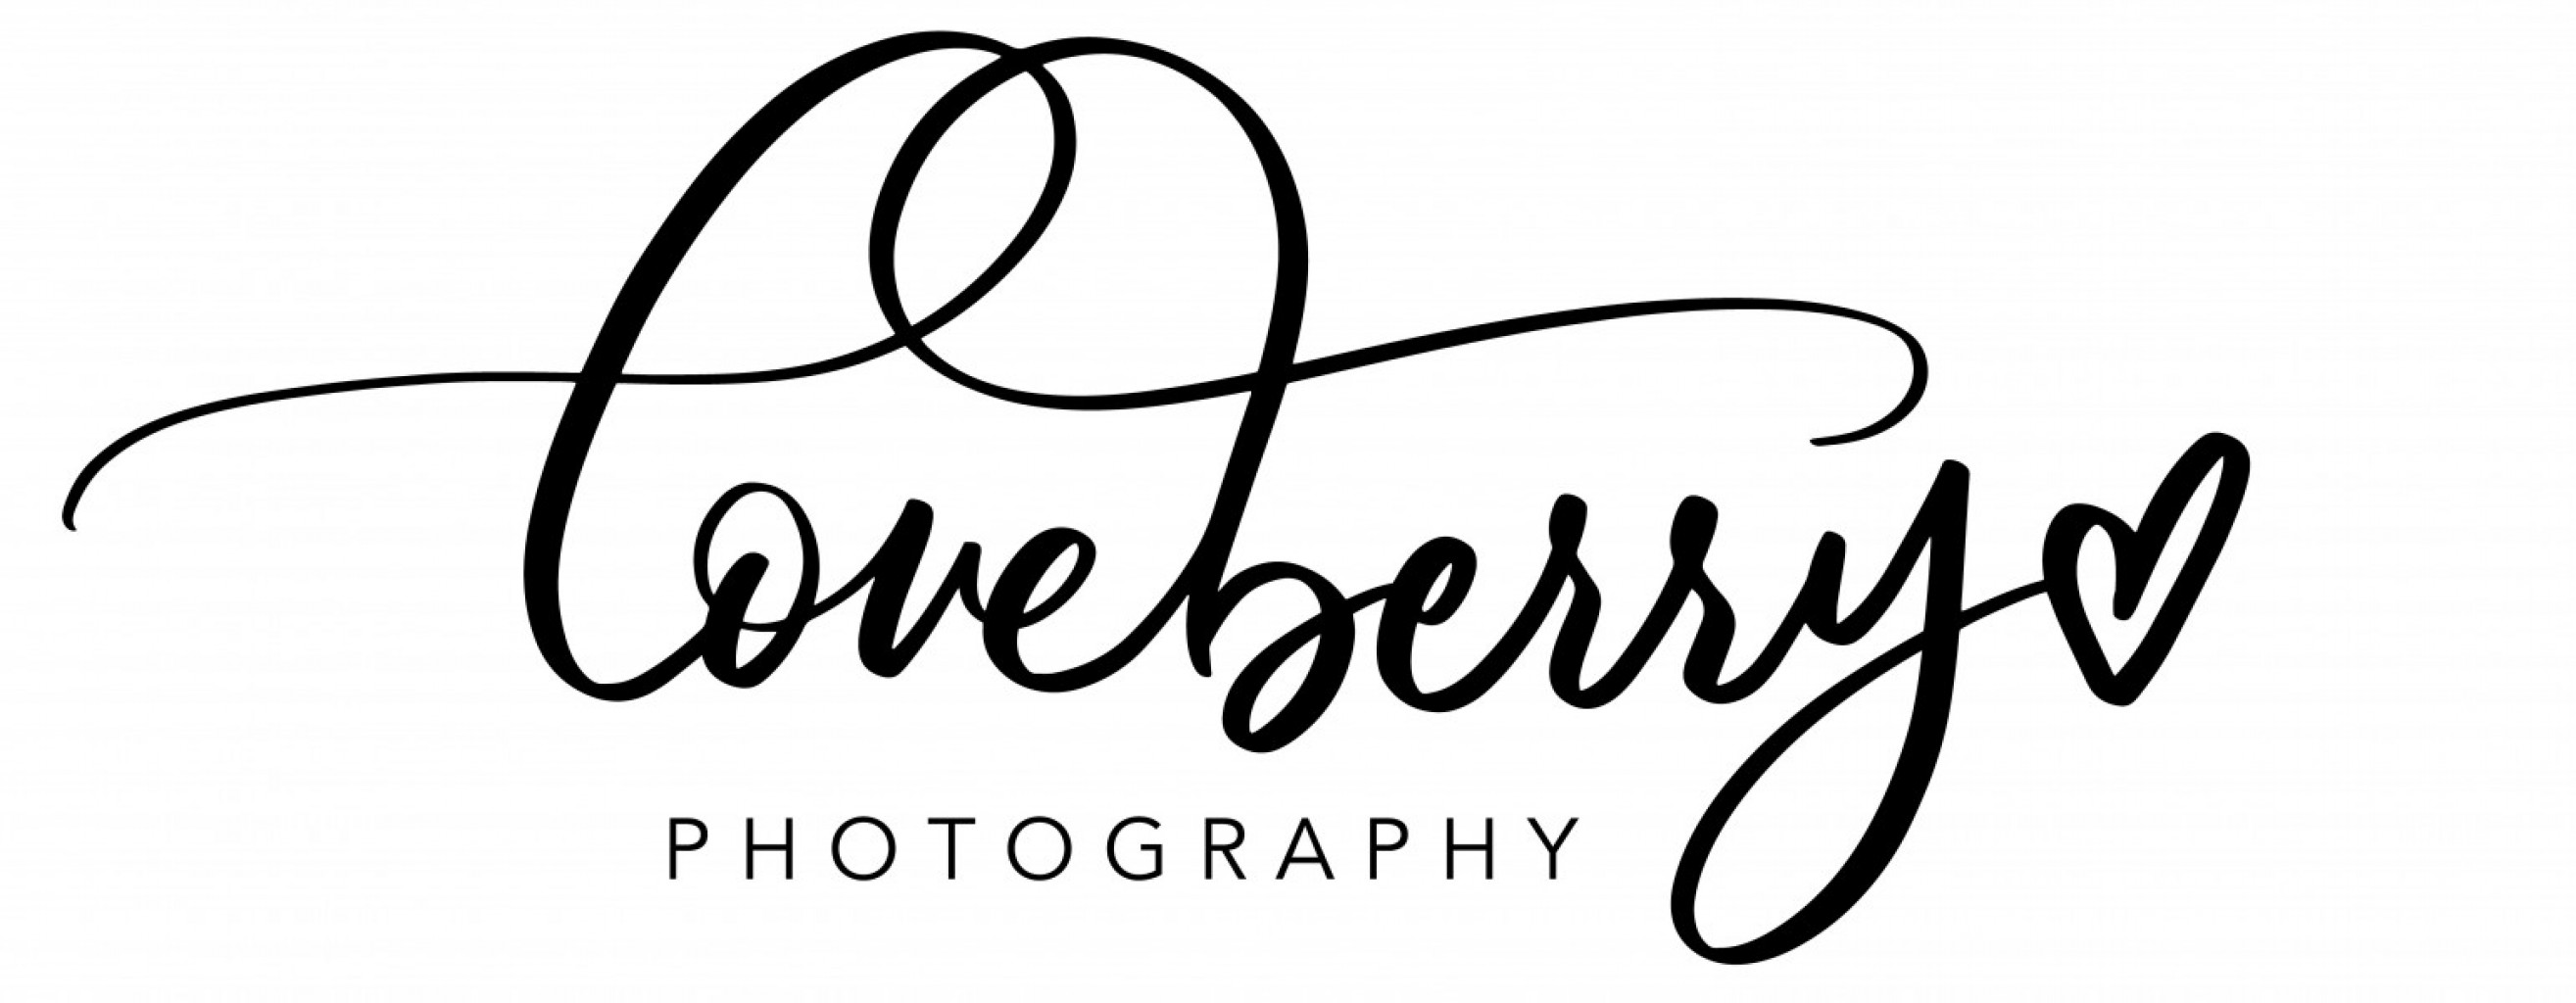 Loveberry Photography